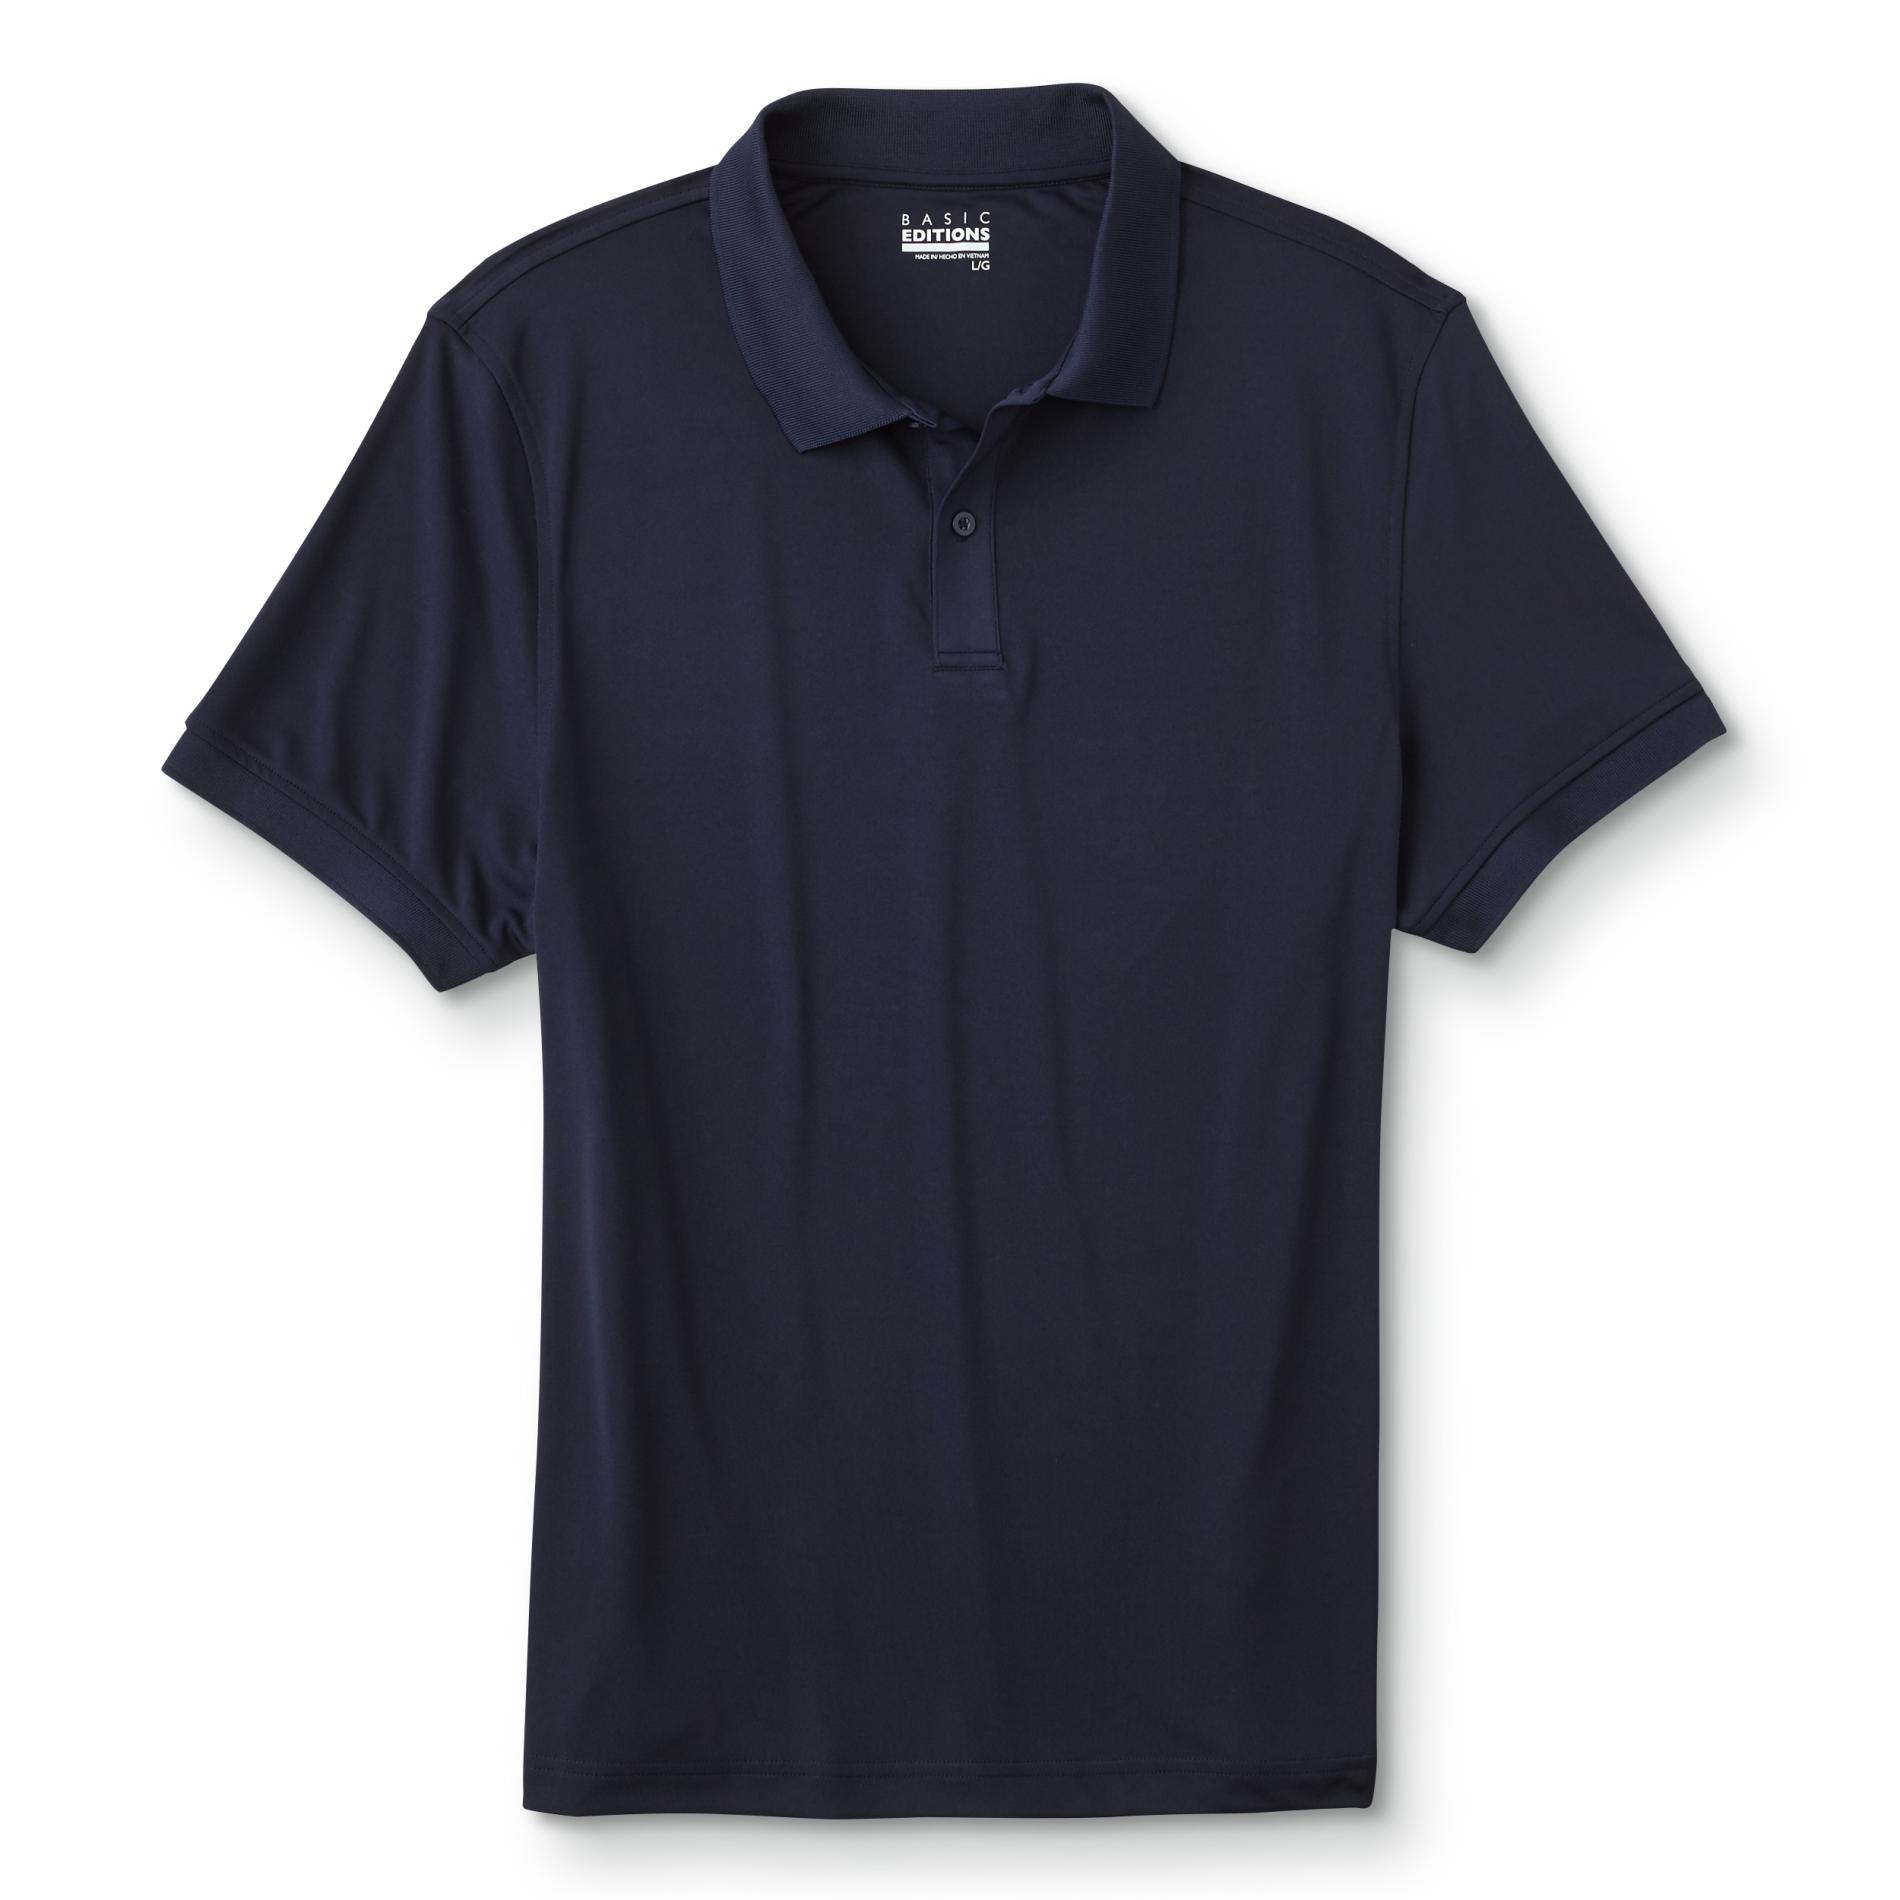 Basic Editions Men's Big and Tall Polo Shirt